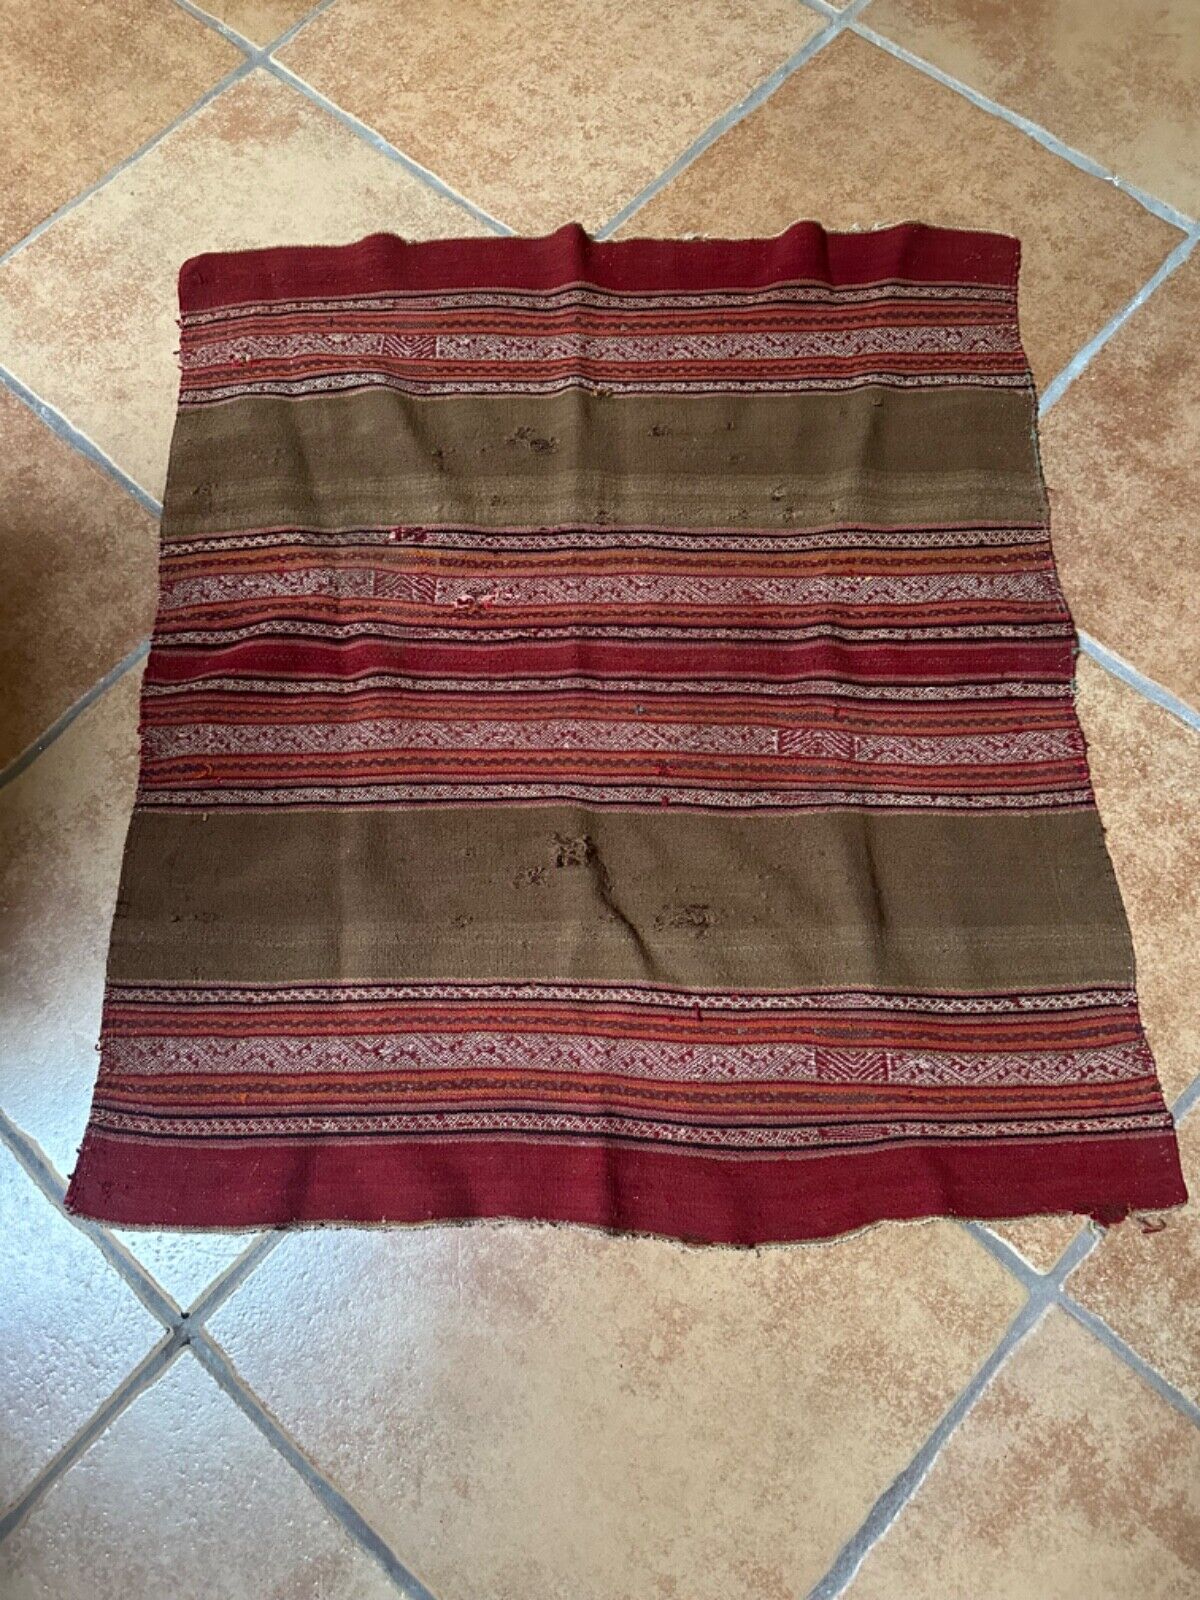 Peruvian blanket vintage handmade